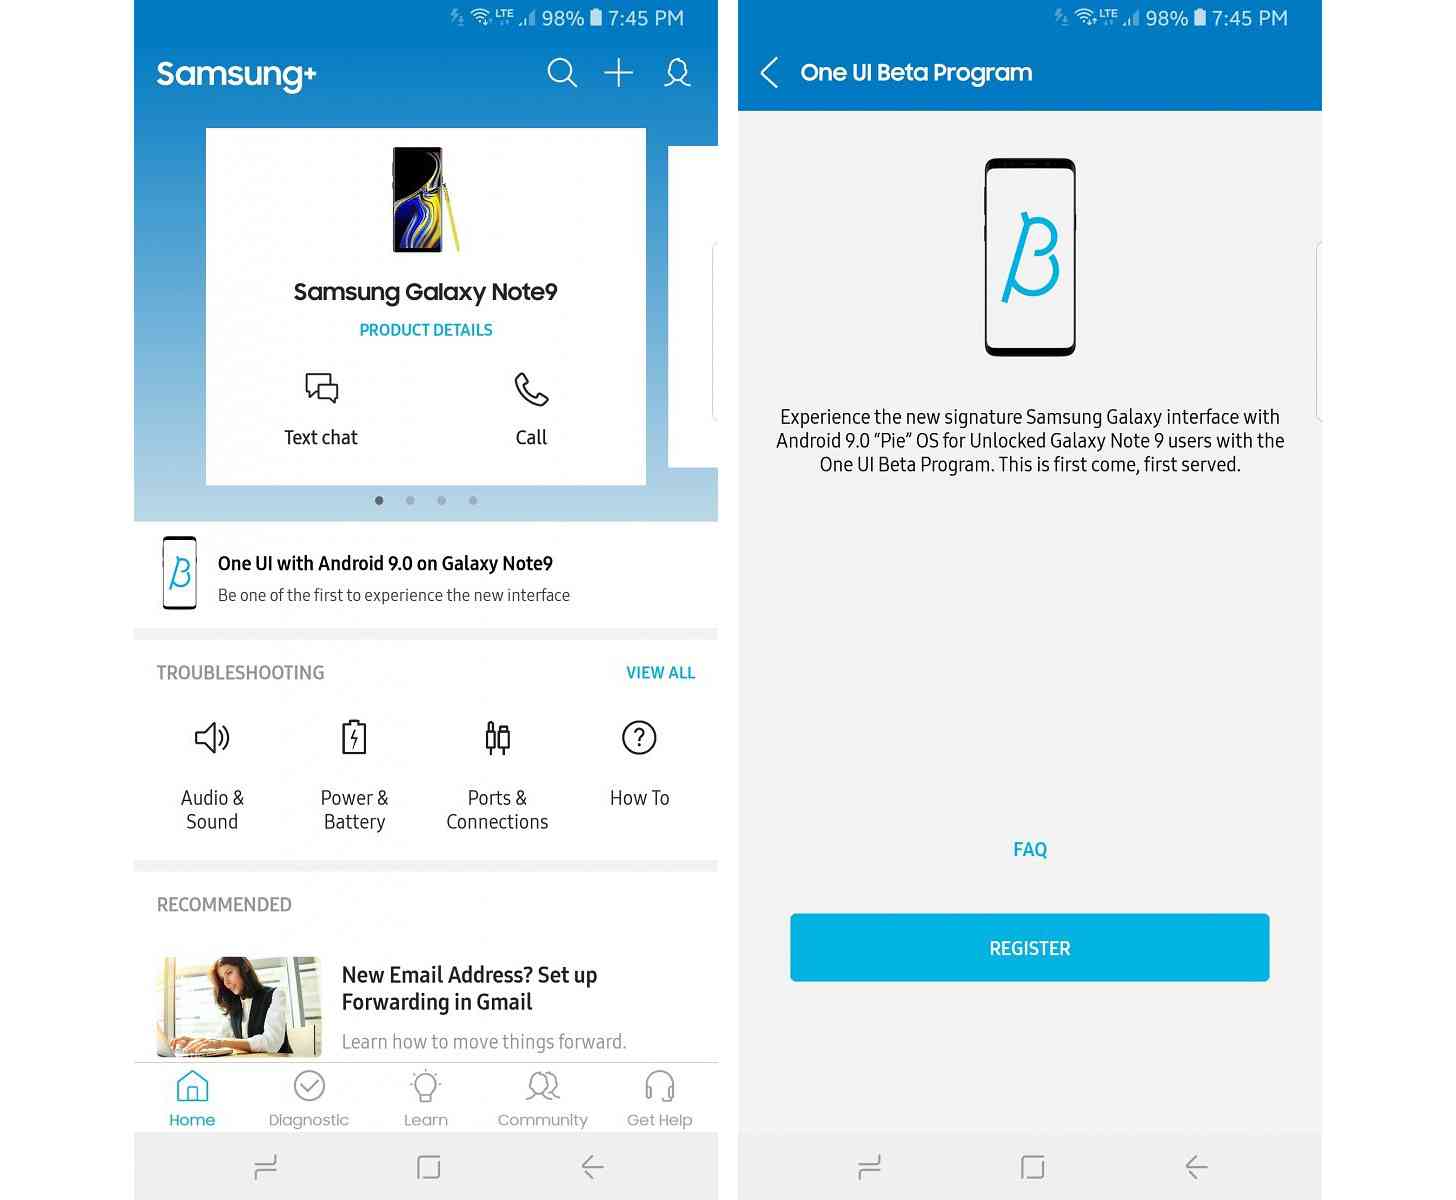 Samsung Galaxy Note 9 One UI beta